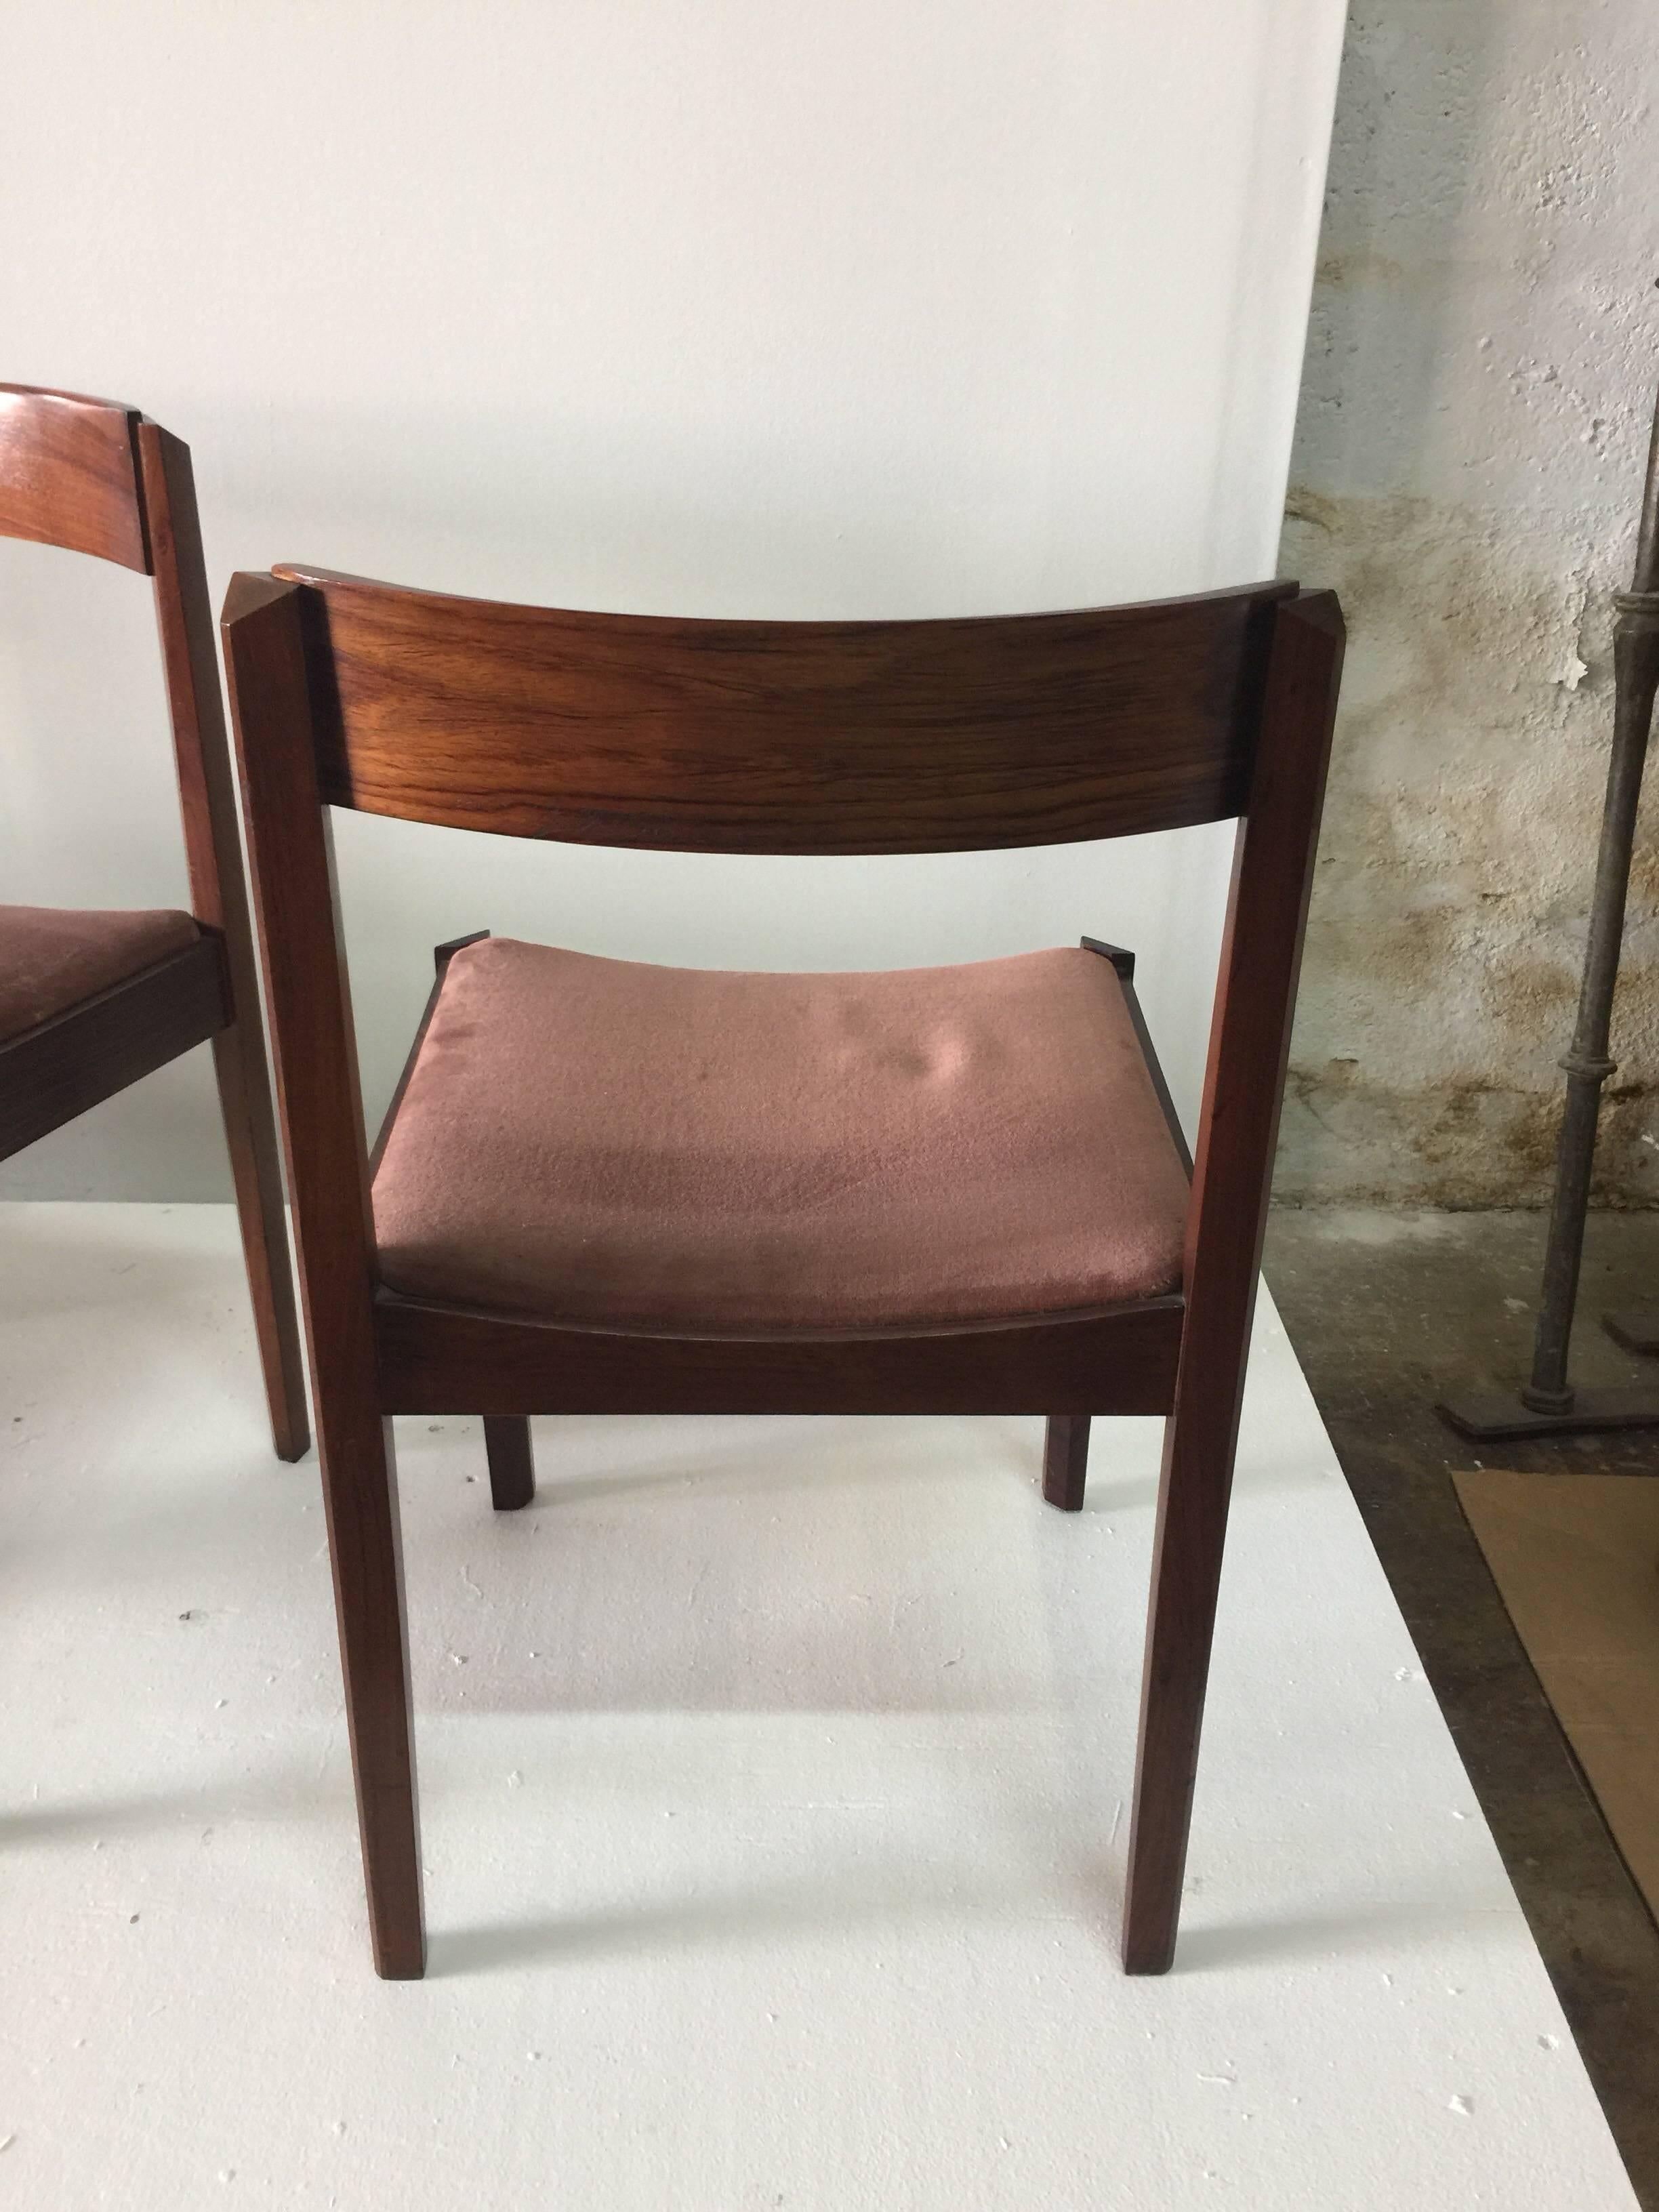 All original vintage dining chairs - sleek design and very sturdy. Original velvet seats.